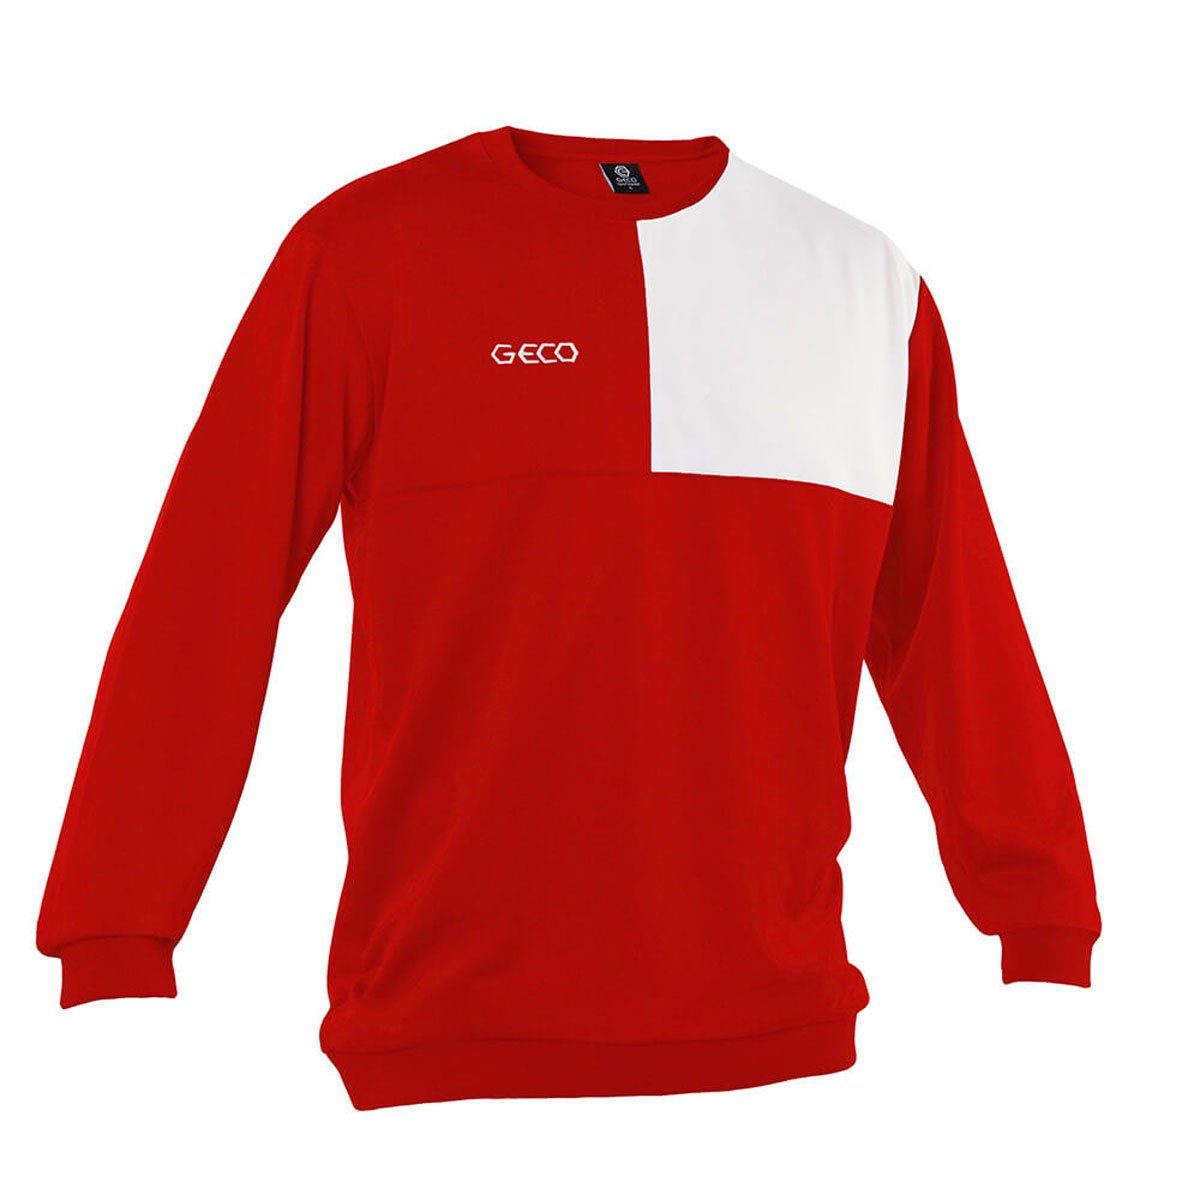 Sweatshirt Fußball Geco Geco Kusi Sportswear Sweatshirt Trainings zweifarbig rot